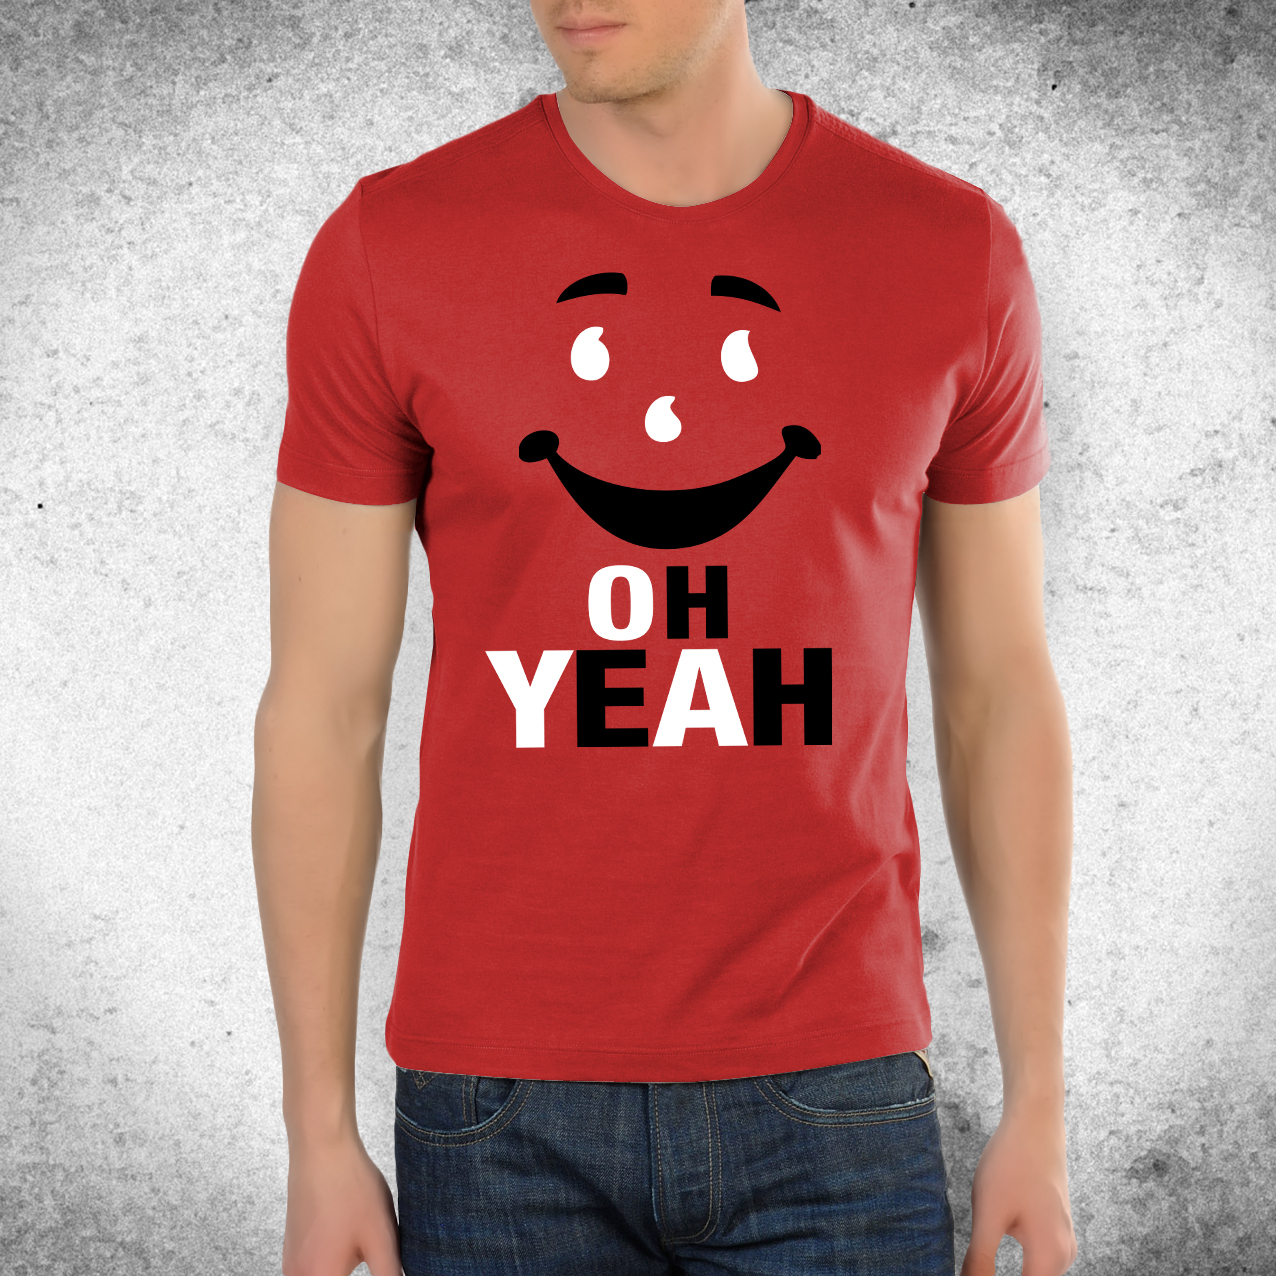 OH YEAH - Koolaid Man Tee Shirt | i-teez.com